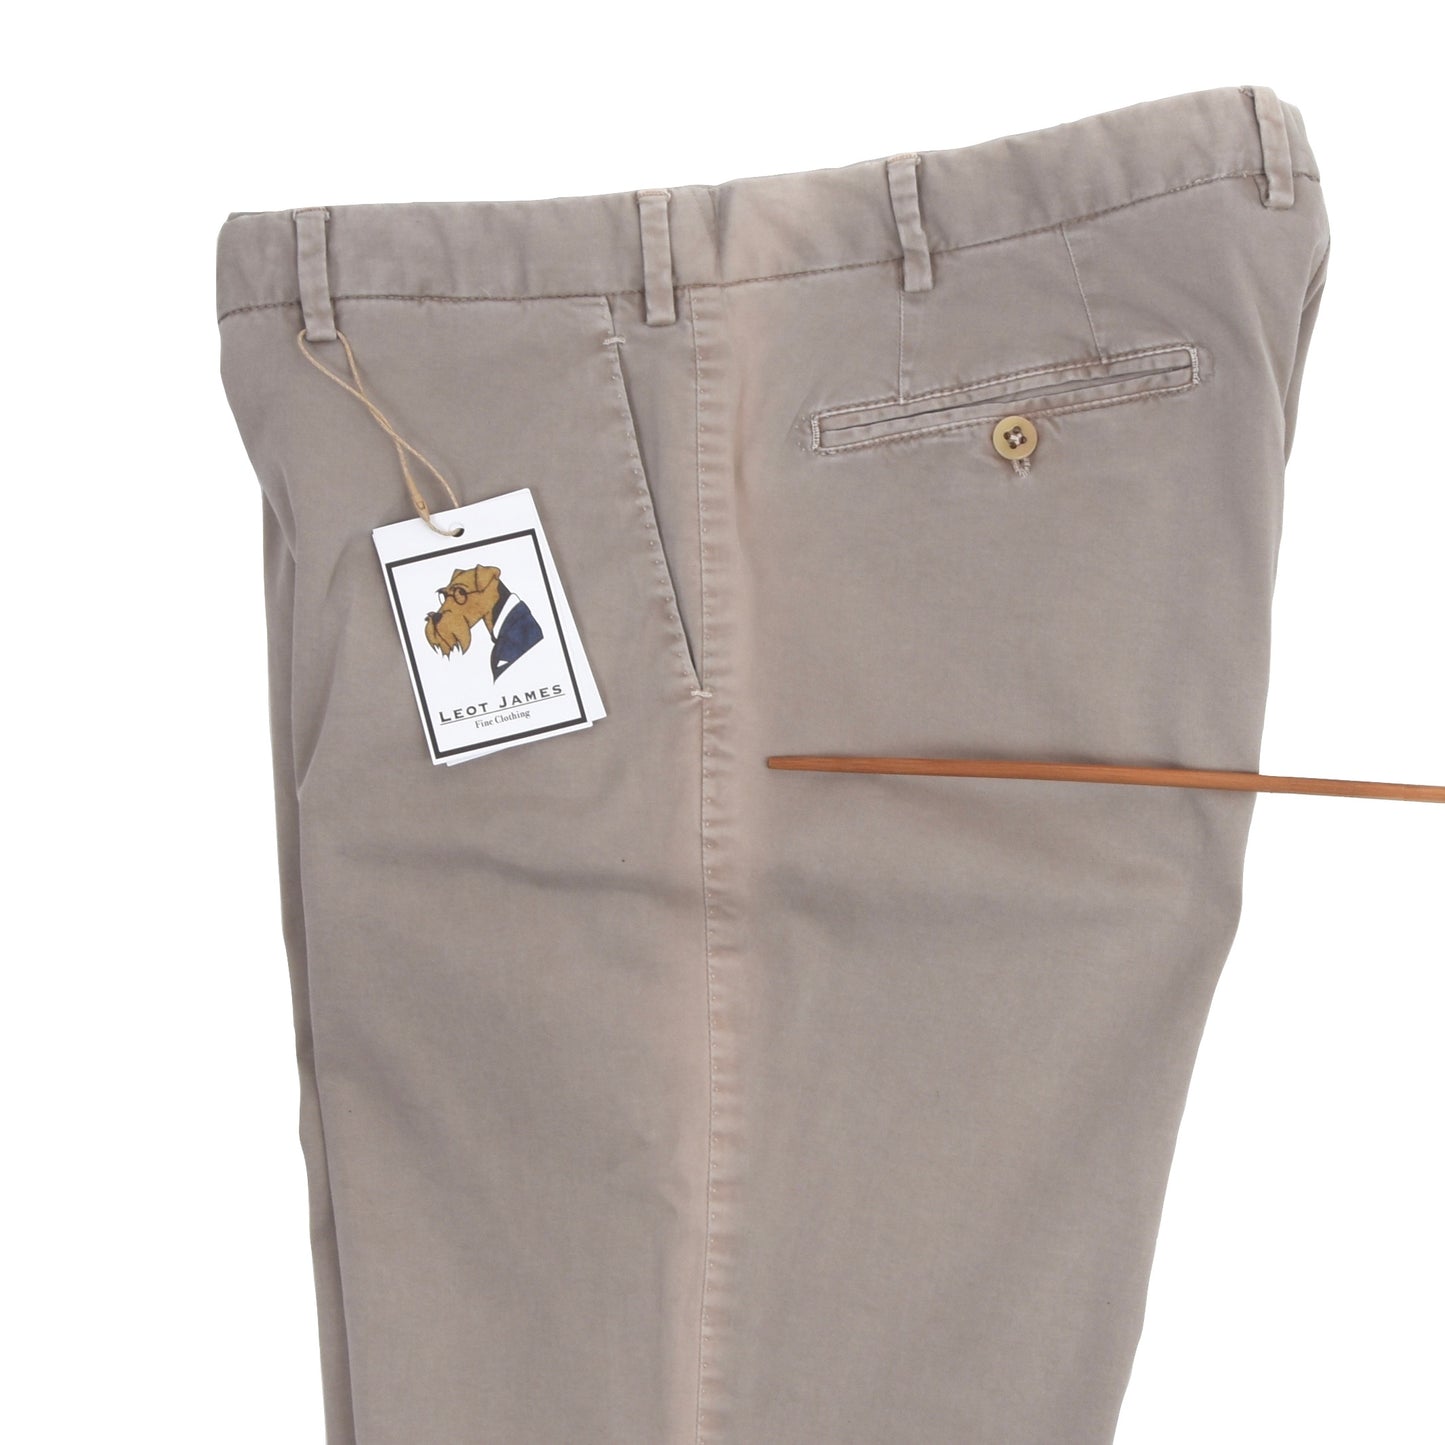 Luigi Borrelli Napoli Cotton Pants Slacks Size 54 - Tan